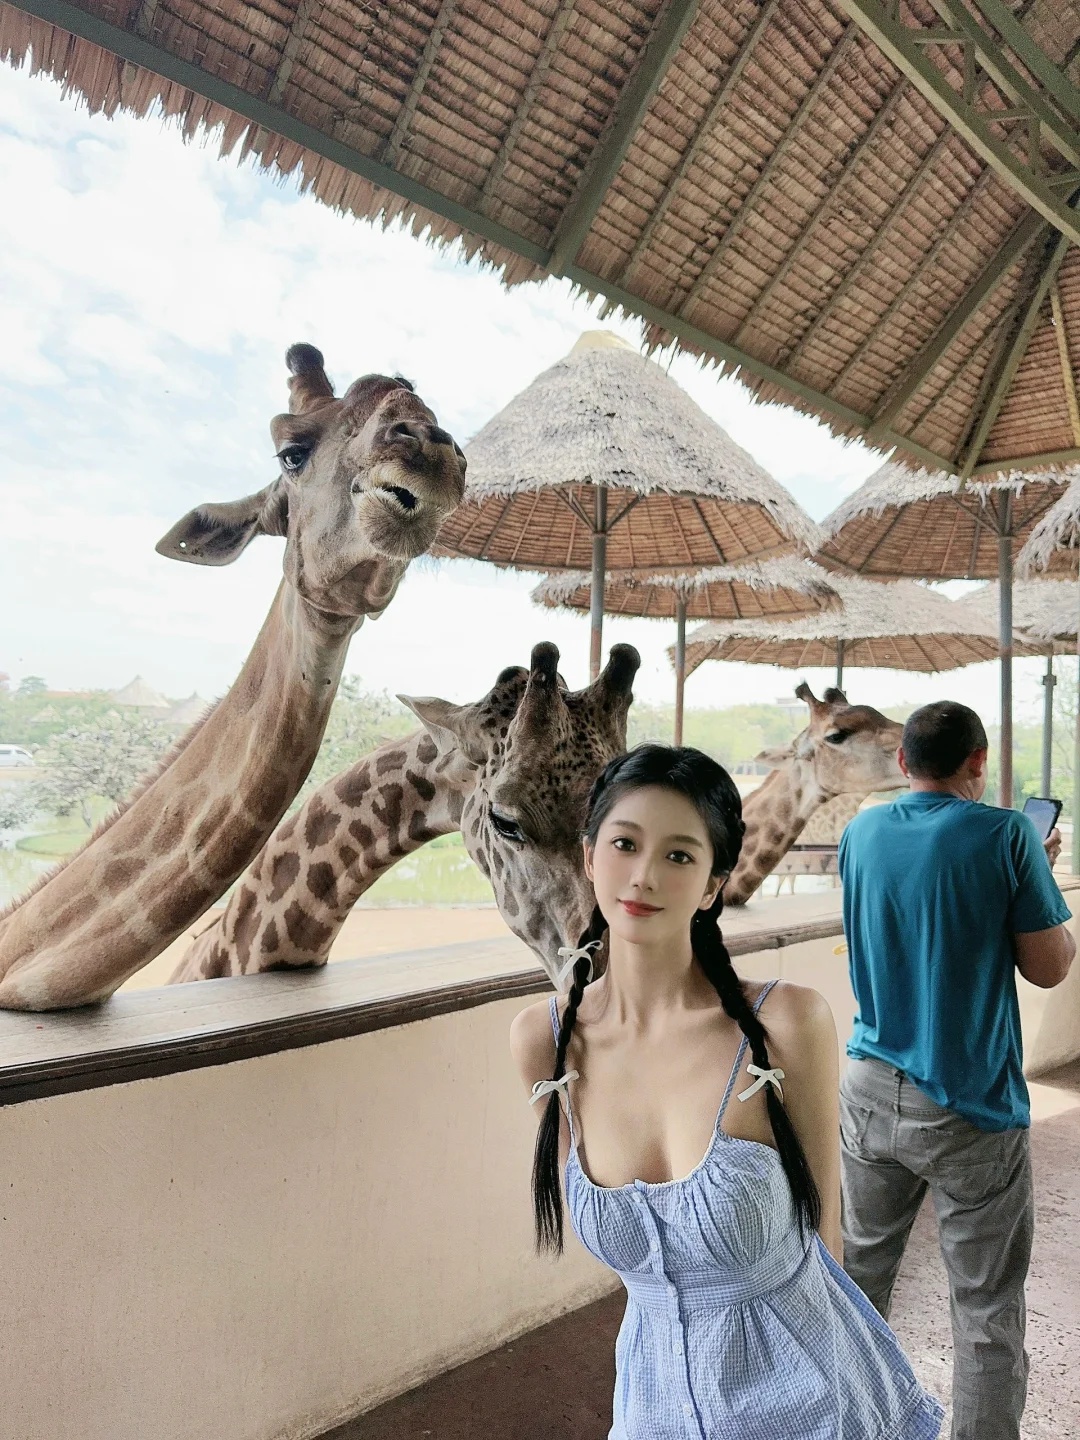 涵涵在呢 是度假呀#SafariWorld  #曼谷safariworld #